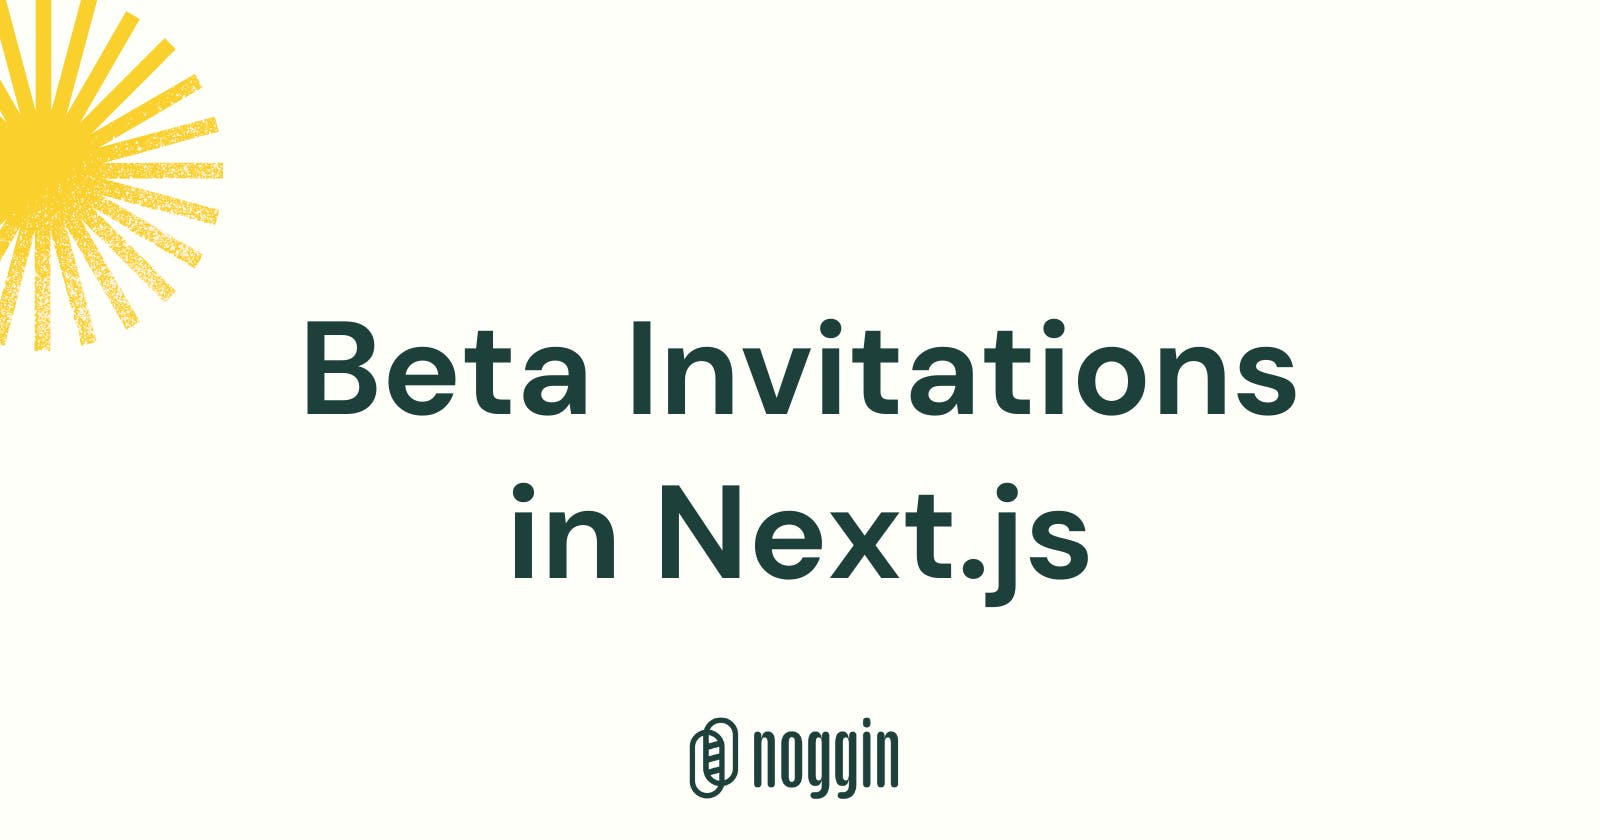 Beta Invitations in Next.js